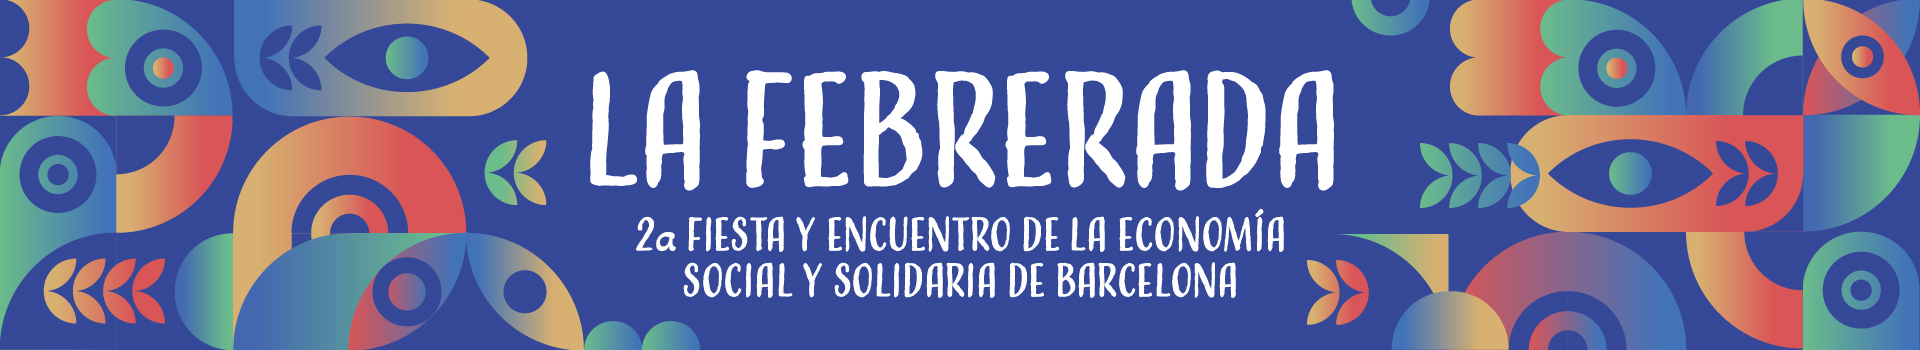 Banner la febrerada castellà